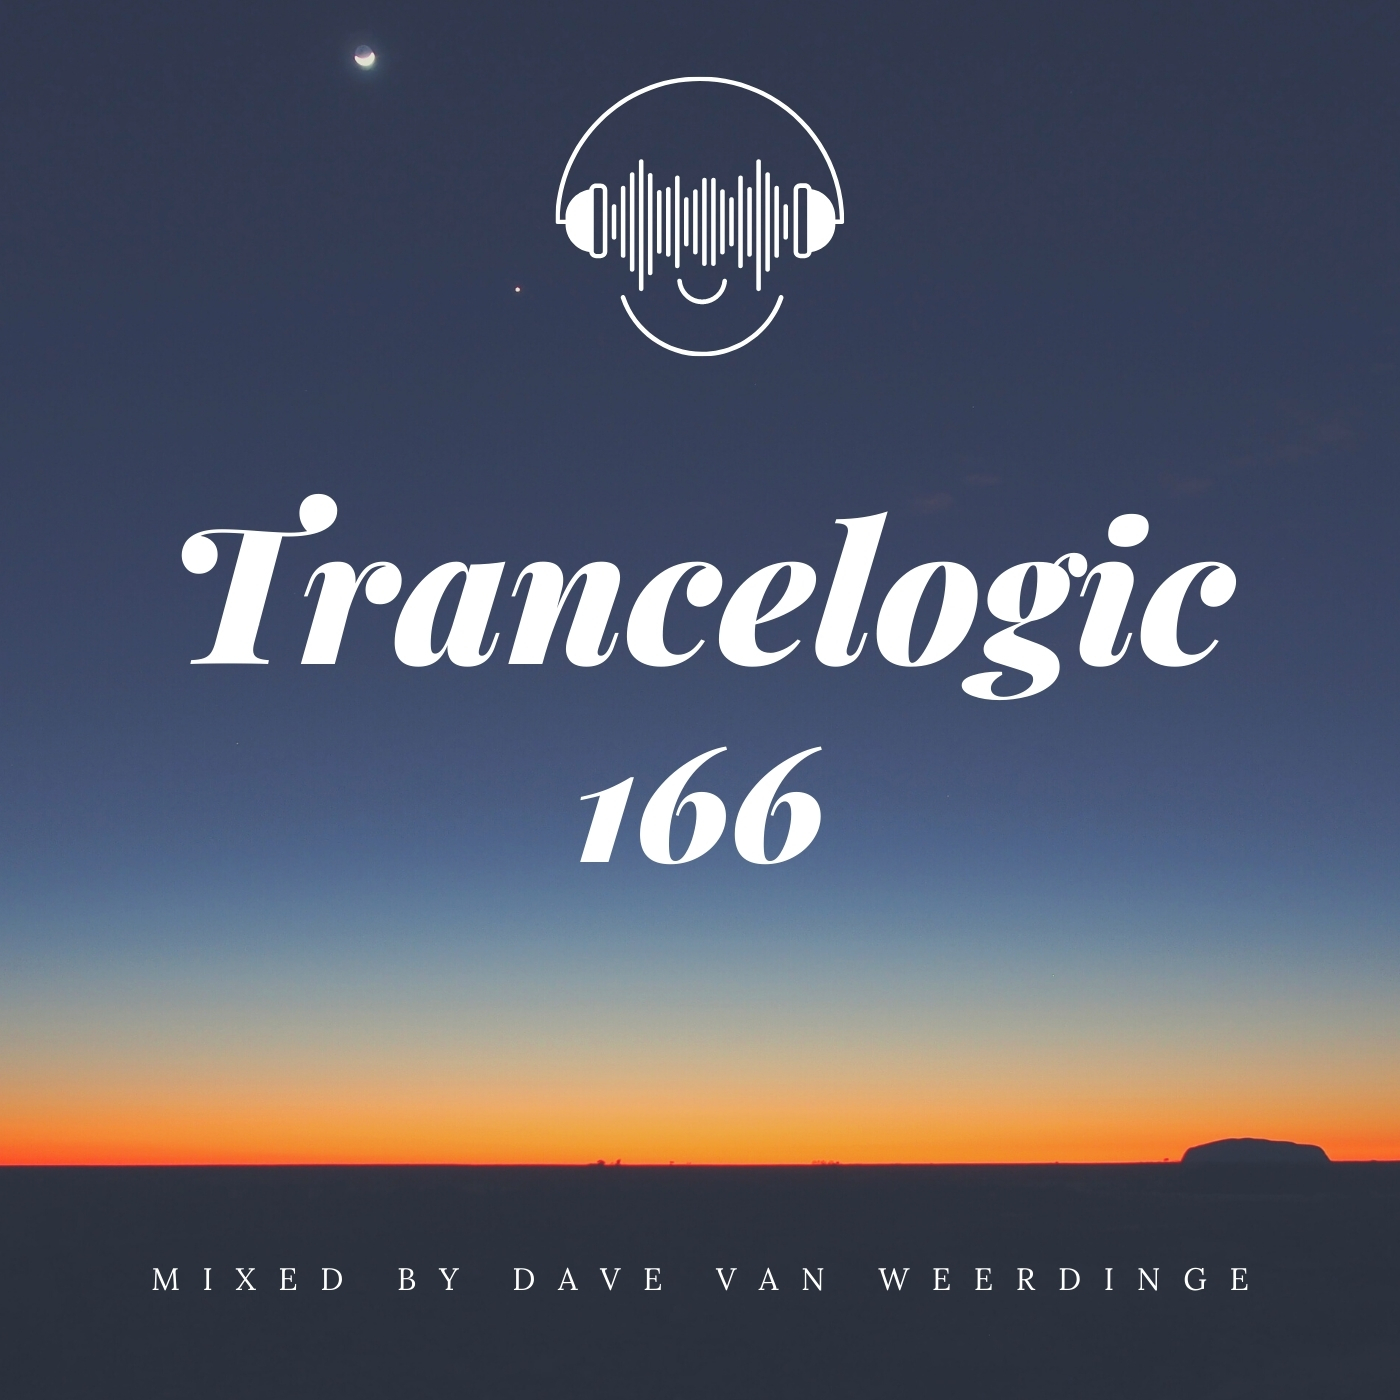 Trancelogic 166 by Dave van Weerdinge